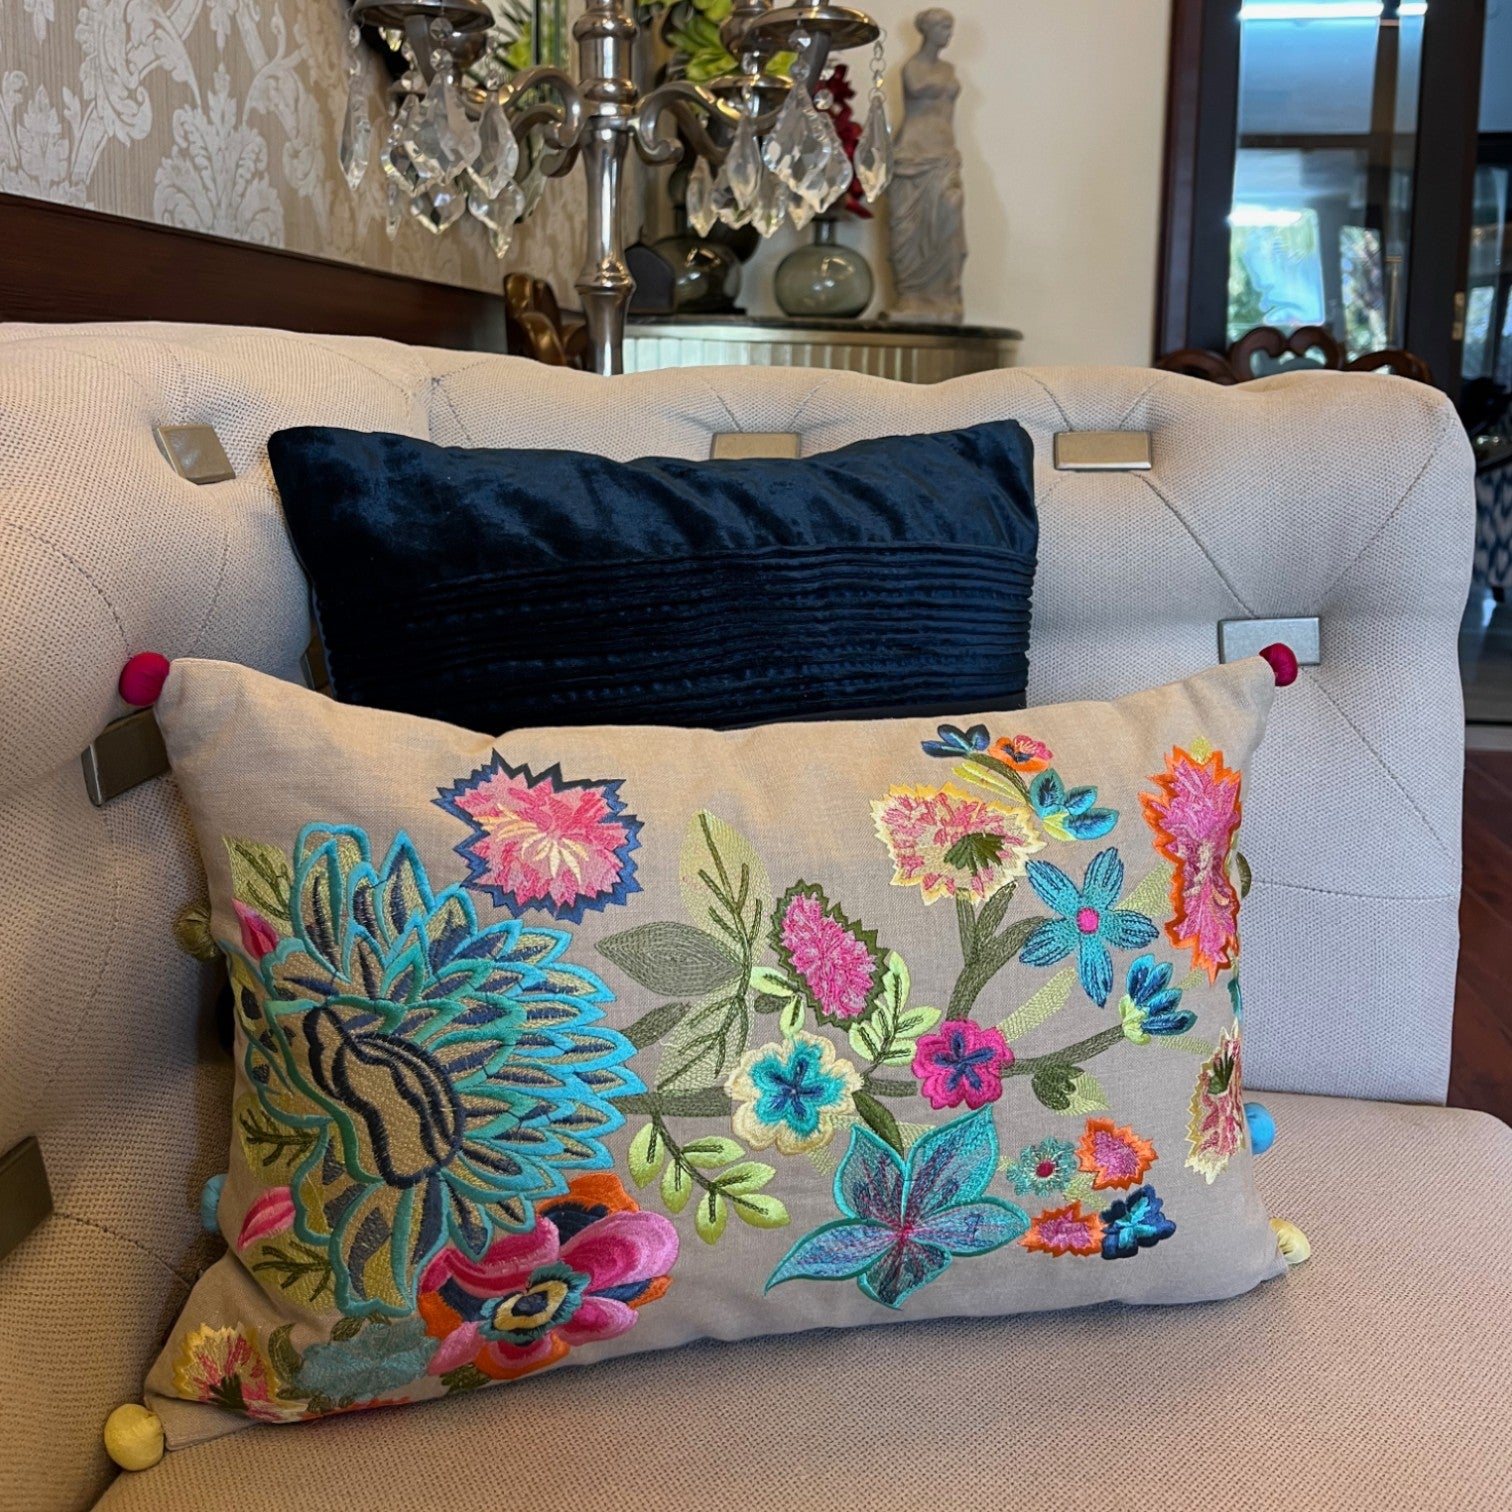 Floral Cushion cover on a sofa